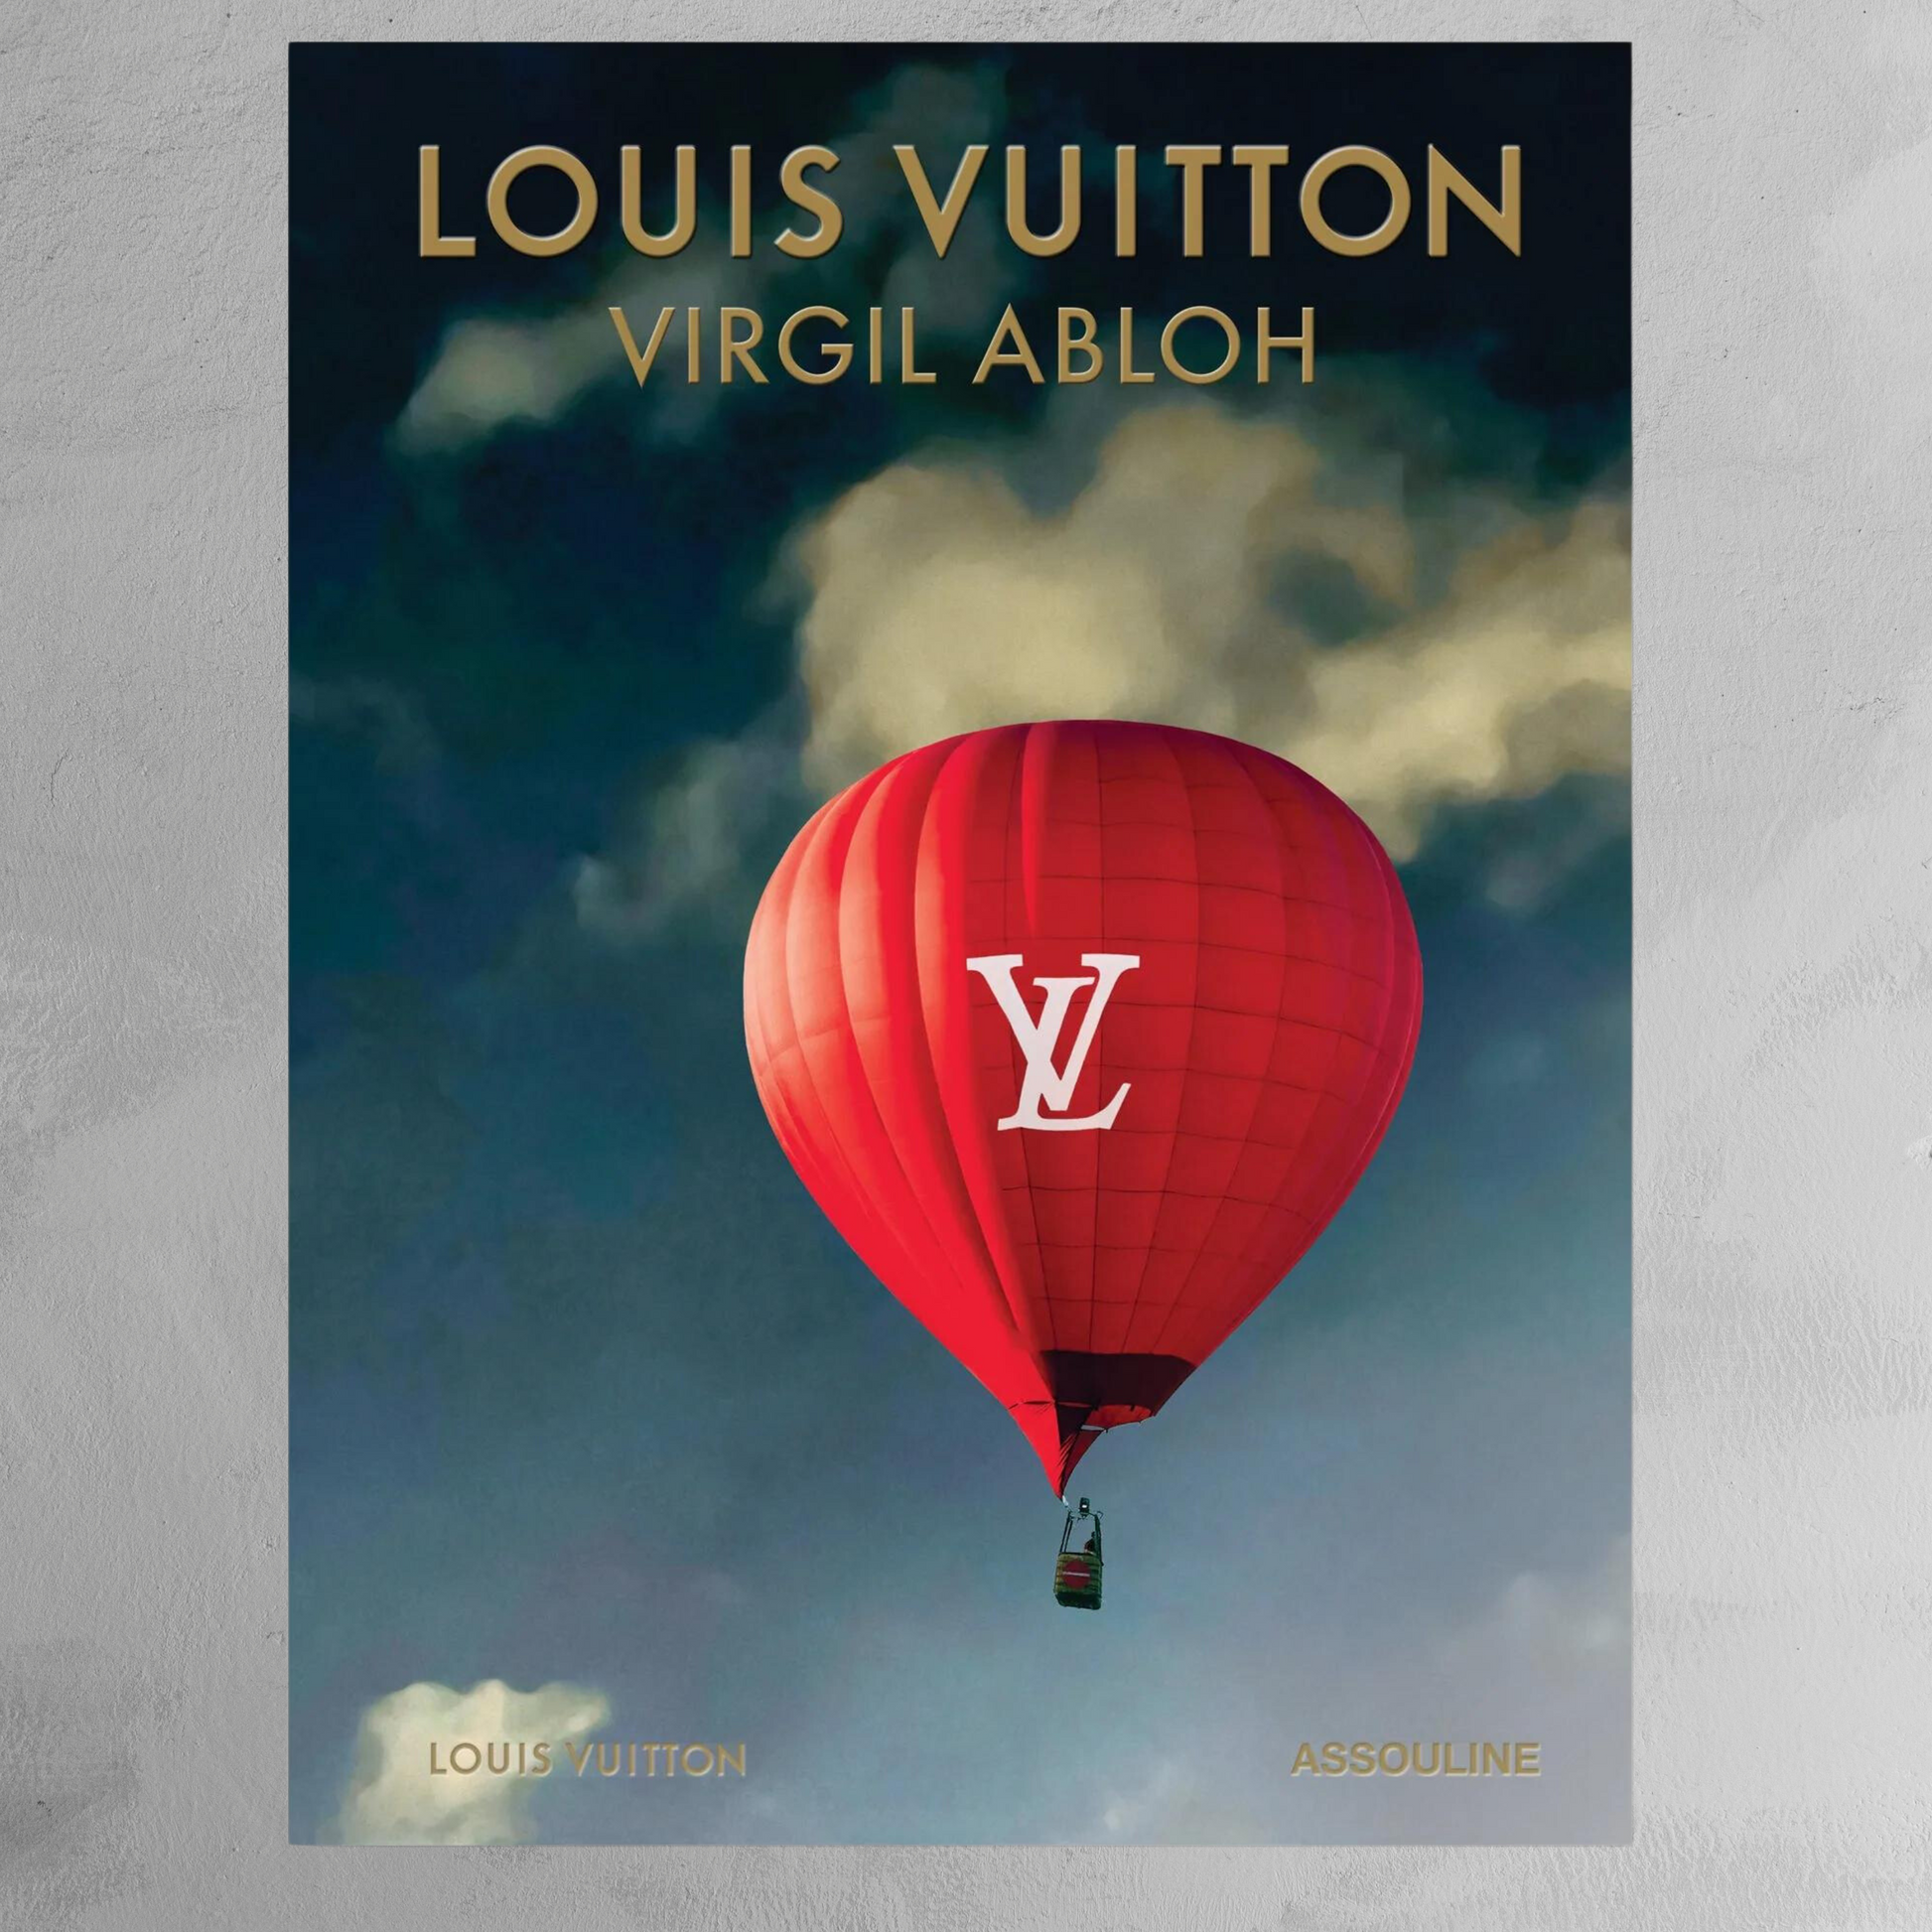 Virgil Abloh's debut Vuitton collection - ICON